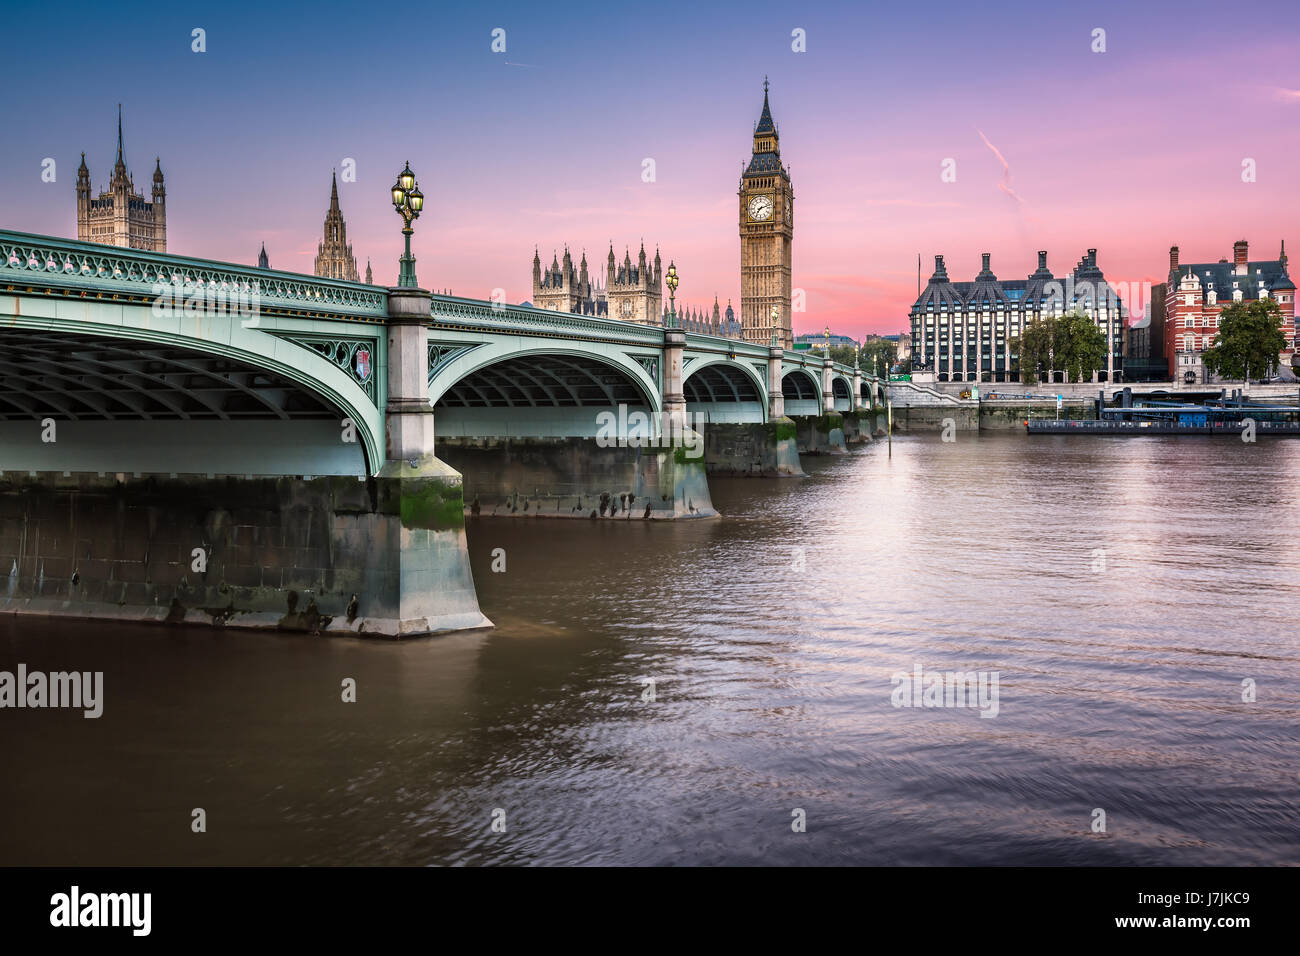 Big Ben, Queen Elizabeth Tower and Westminster Bridge Illuminated at Dawn, London, United Kingdom Stock Photo